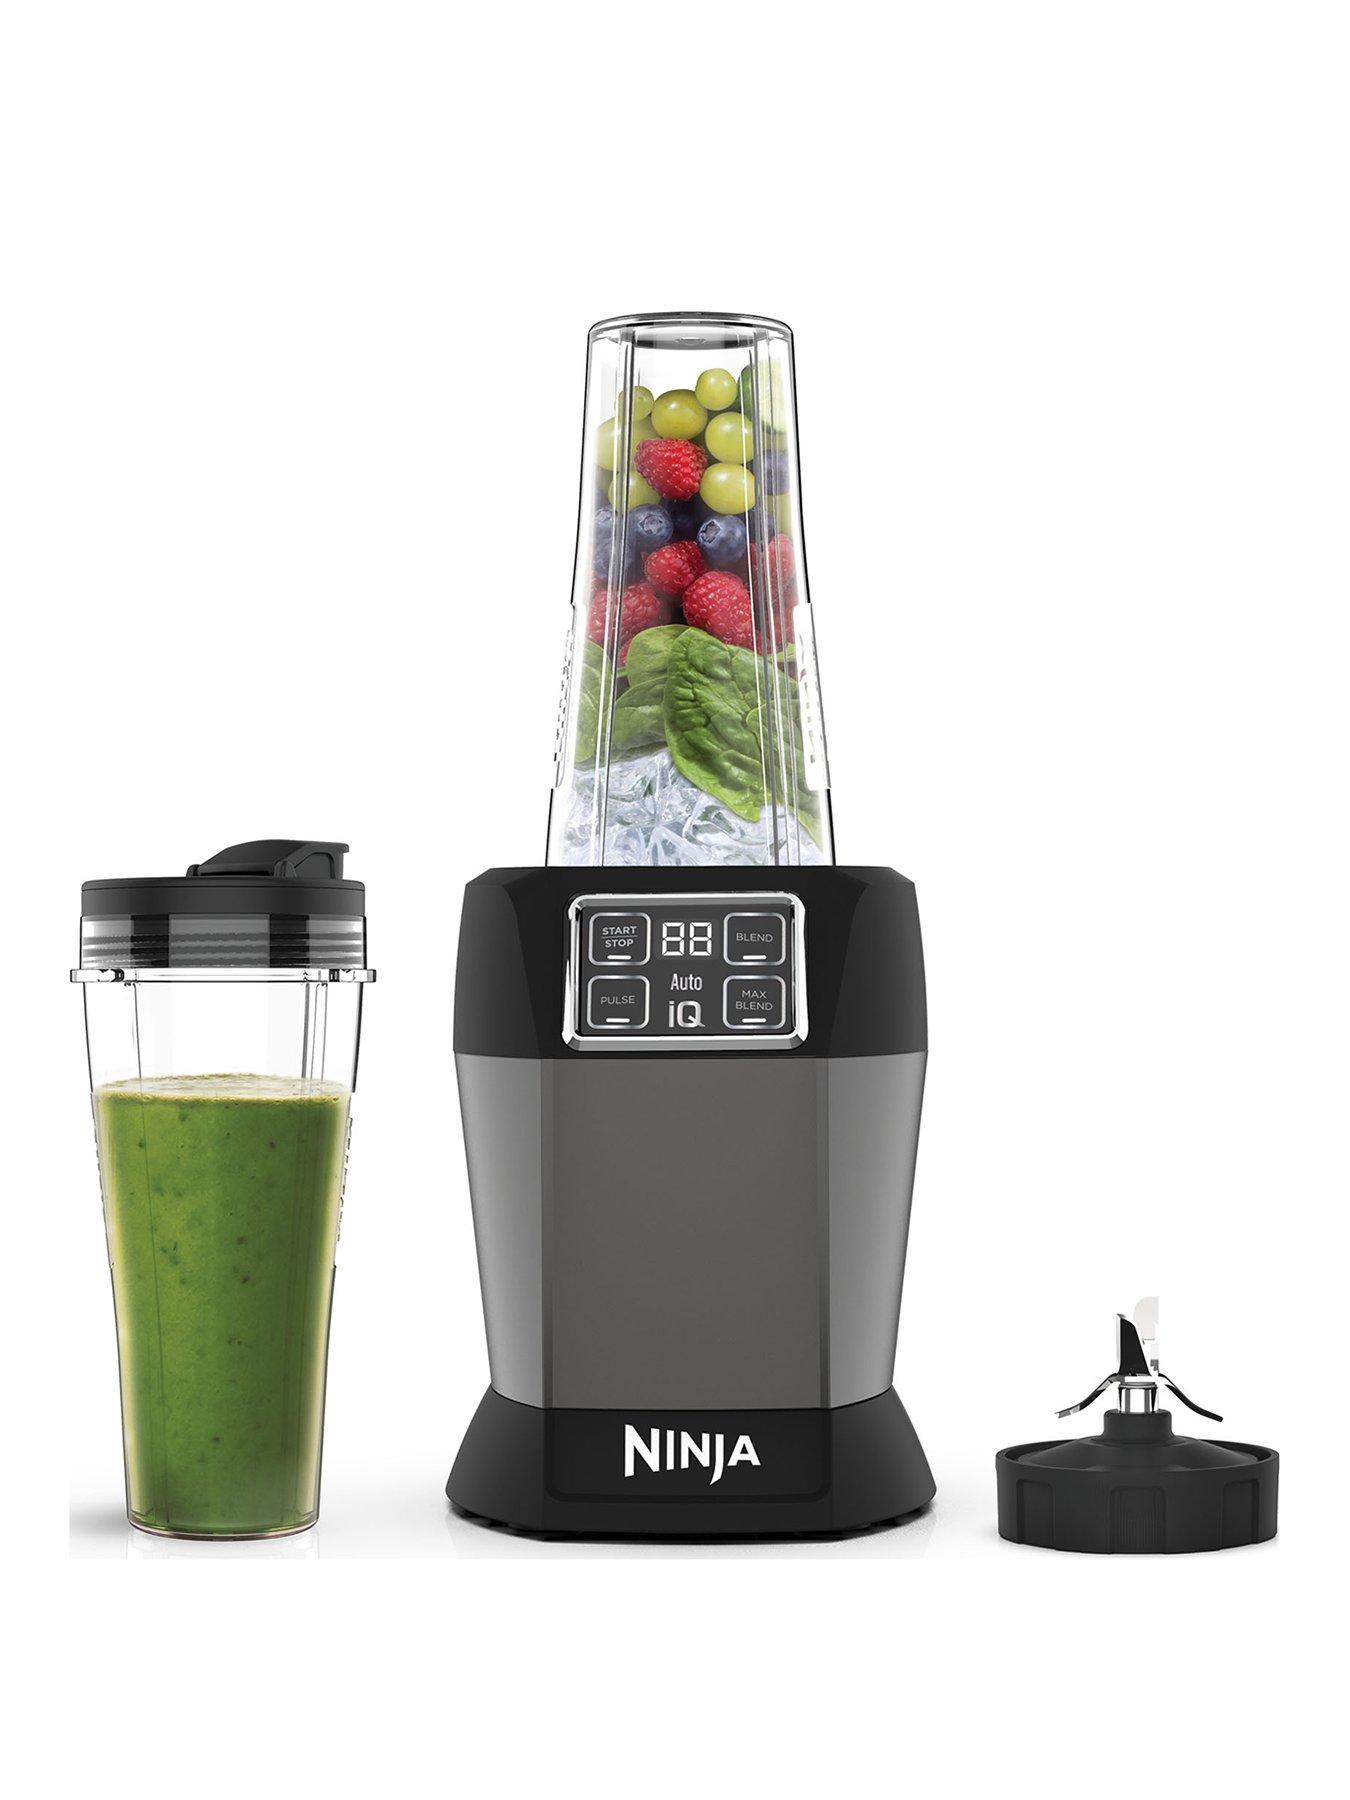 Ninja CB350UK 3-in-1 Foodi Power Nutri Blender with Auto-iQ Silver